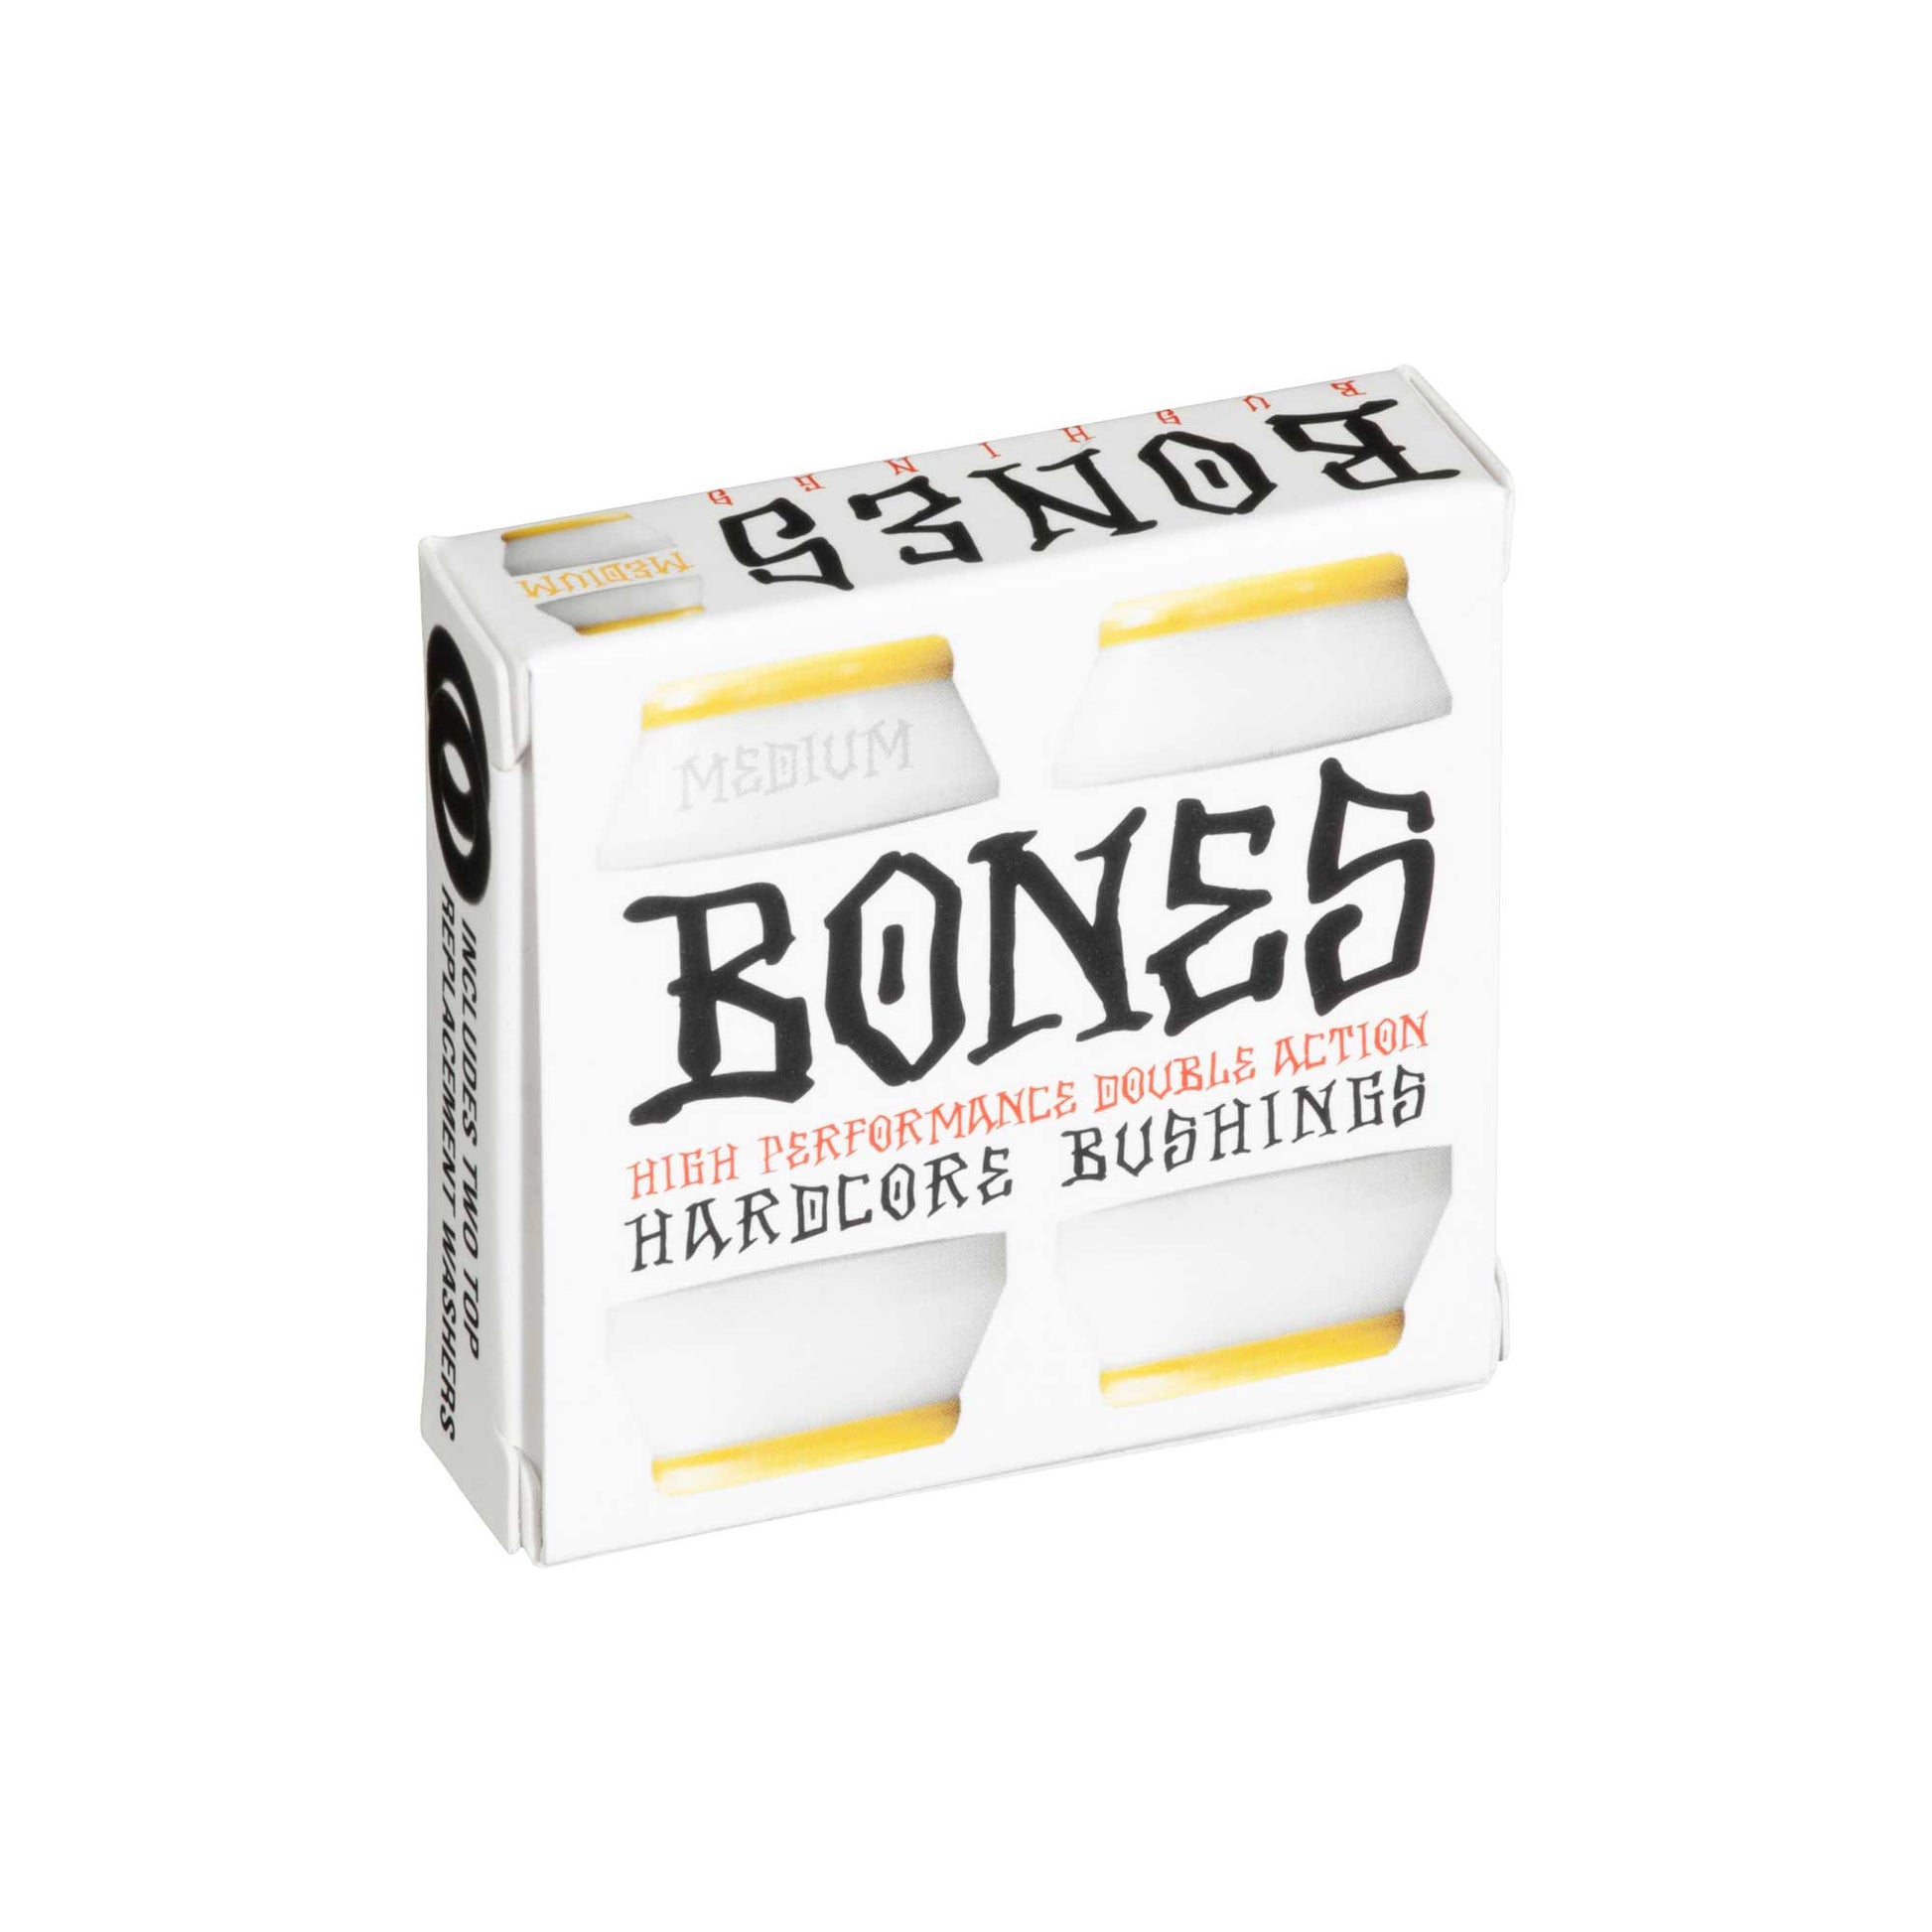 Bones Hardcore Bushings (medium white) - Tiki Room Skateboards - 1